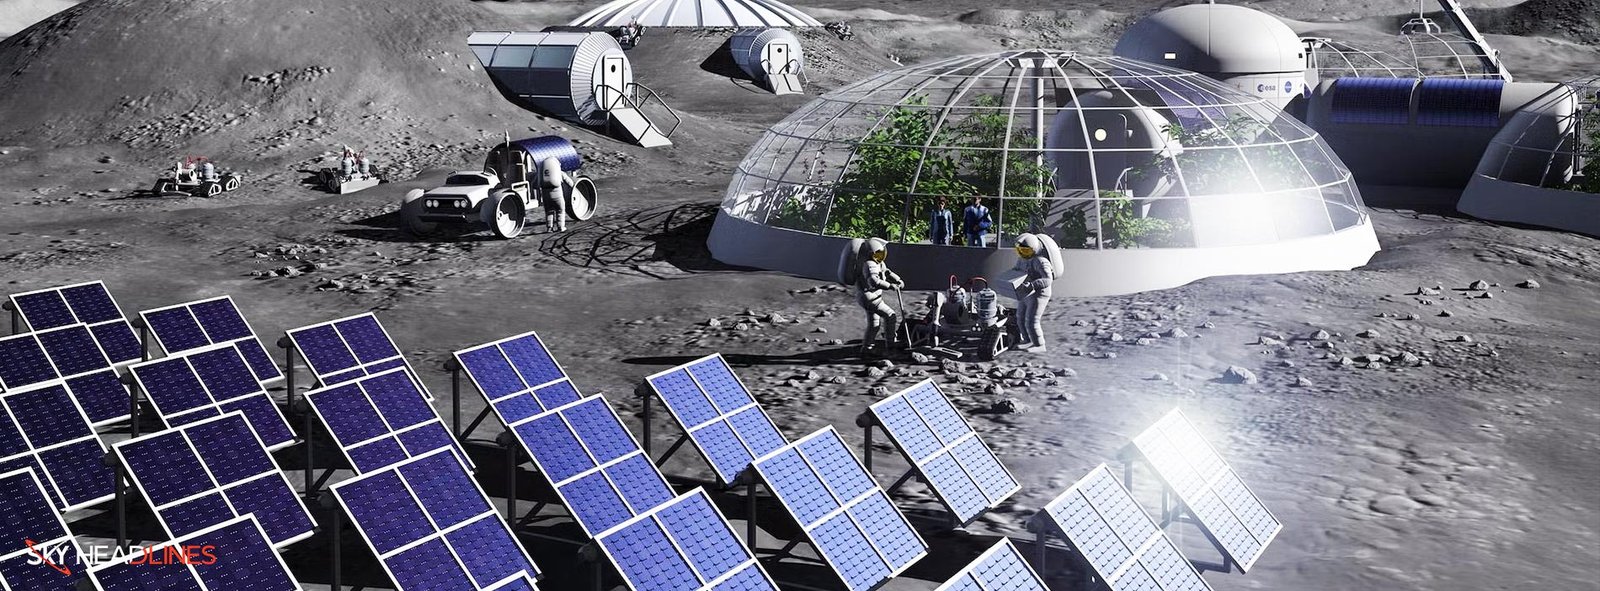 NASA’s-Artemis-Base-camp